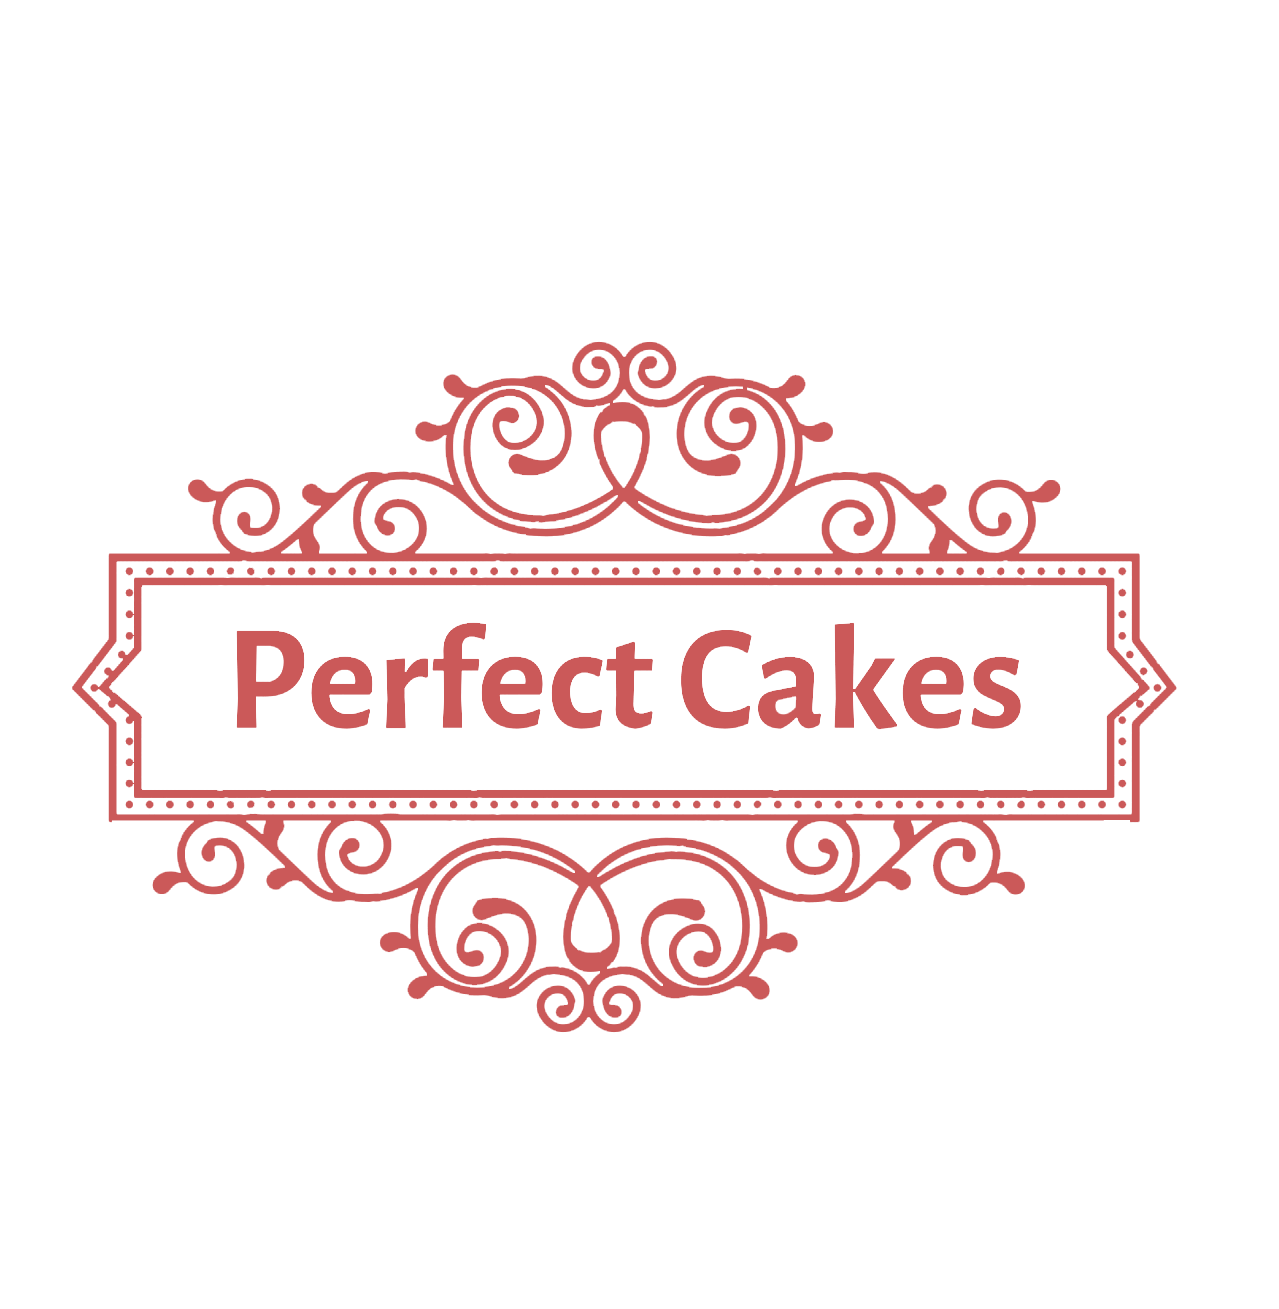 Perfect Cakes Logo